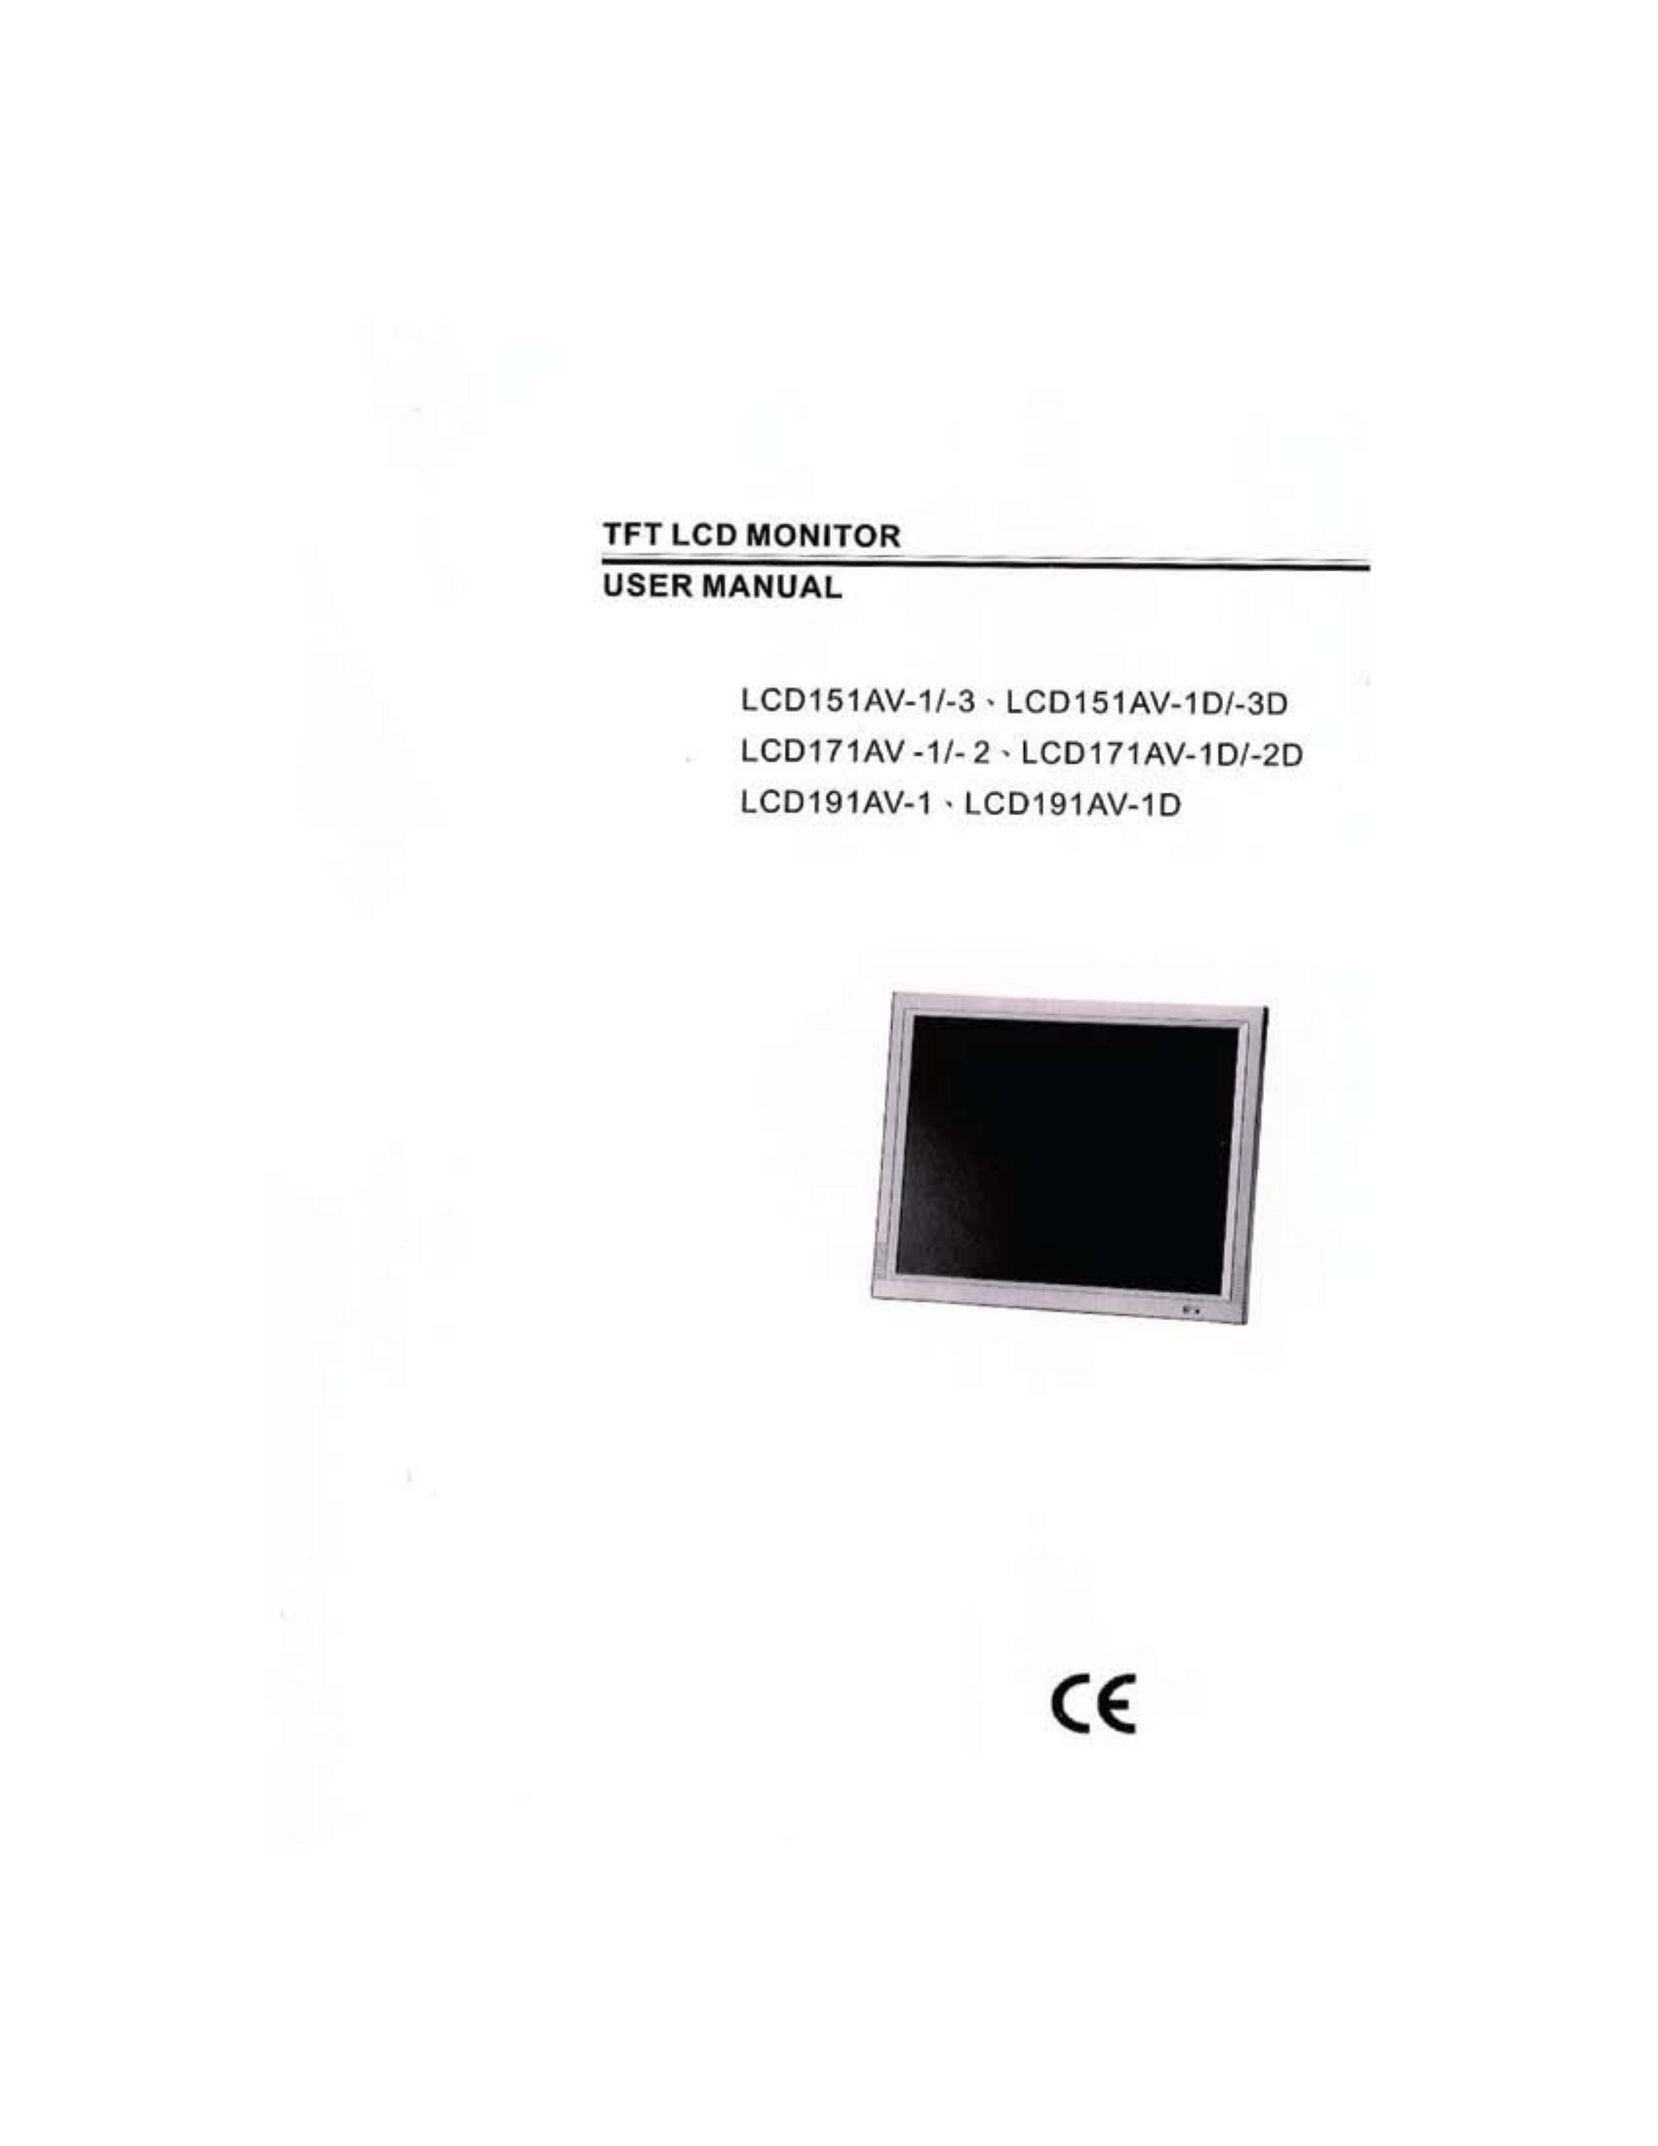 AVE LCD191AV-1 Computer Monitor User Manual